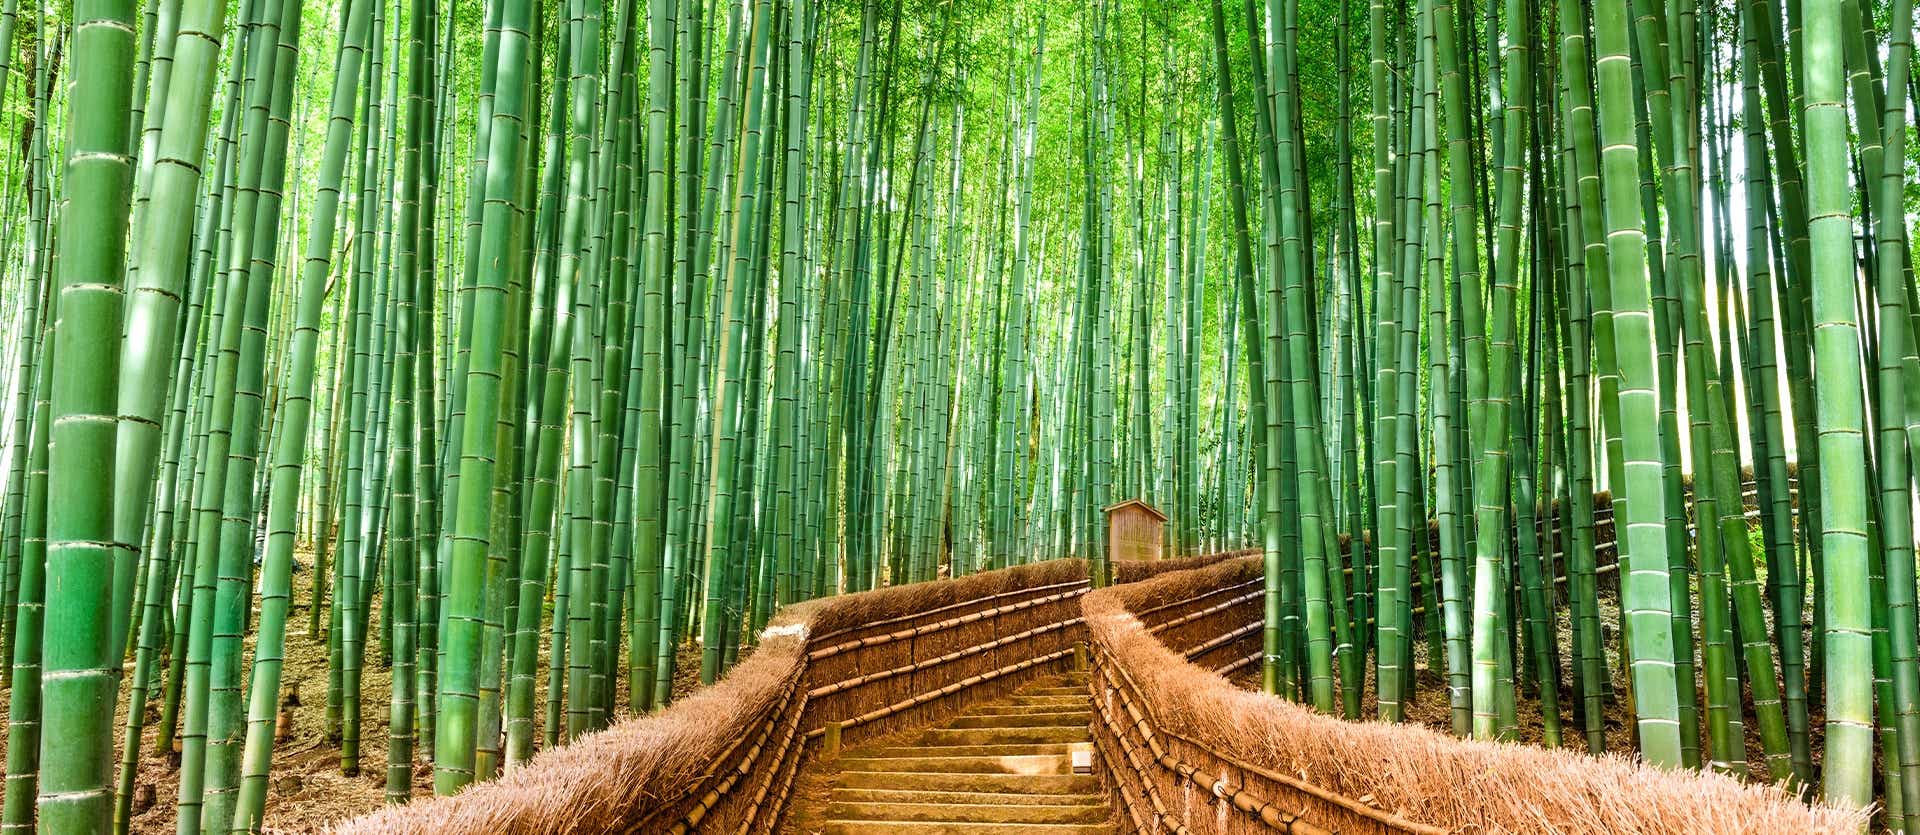 Forêt de bambous d'Arashiyama <span class="iconos separador"></span> Kyoto